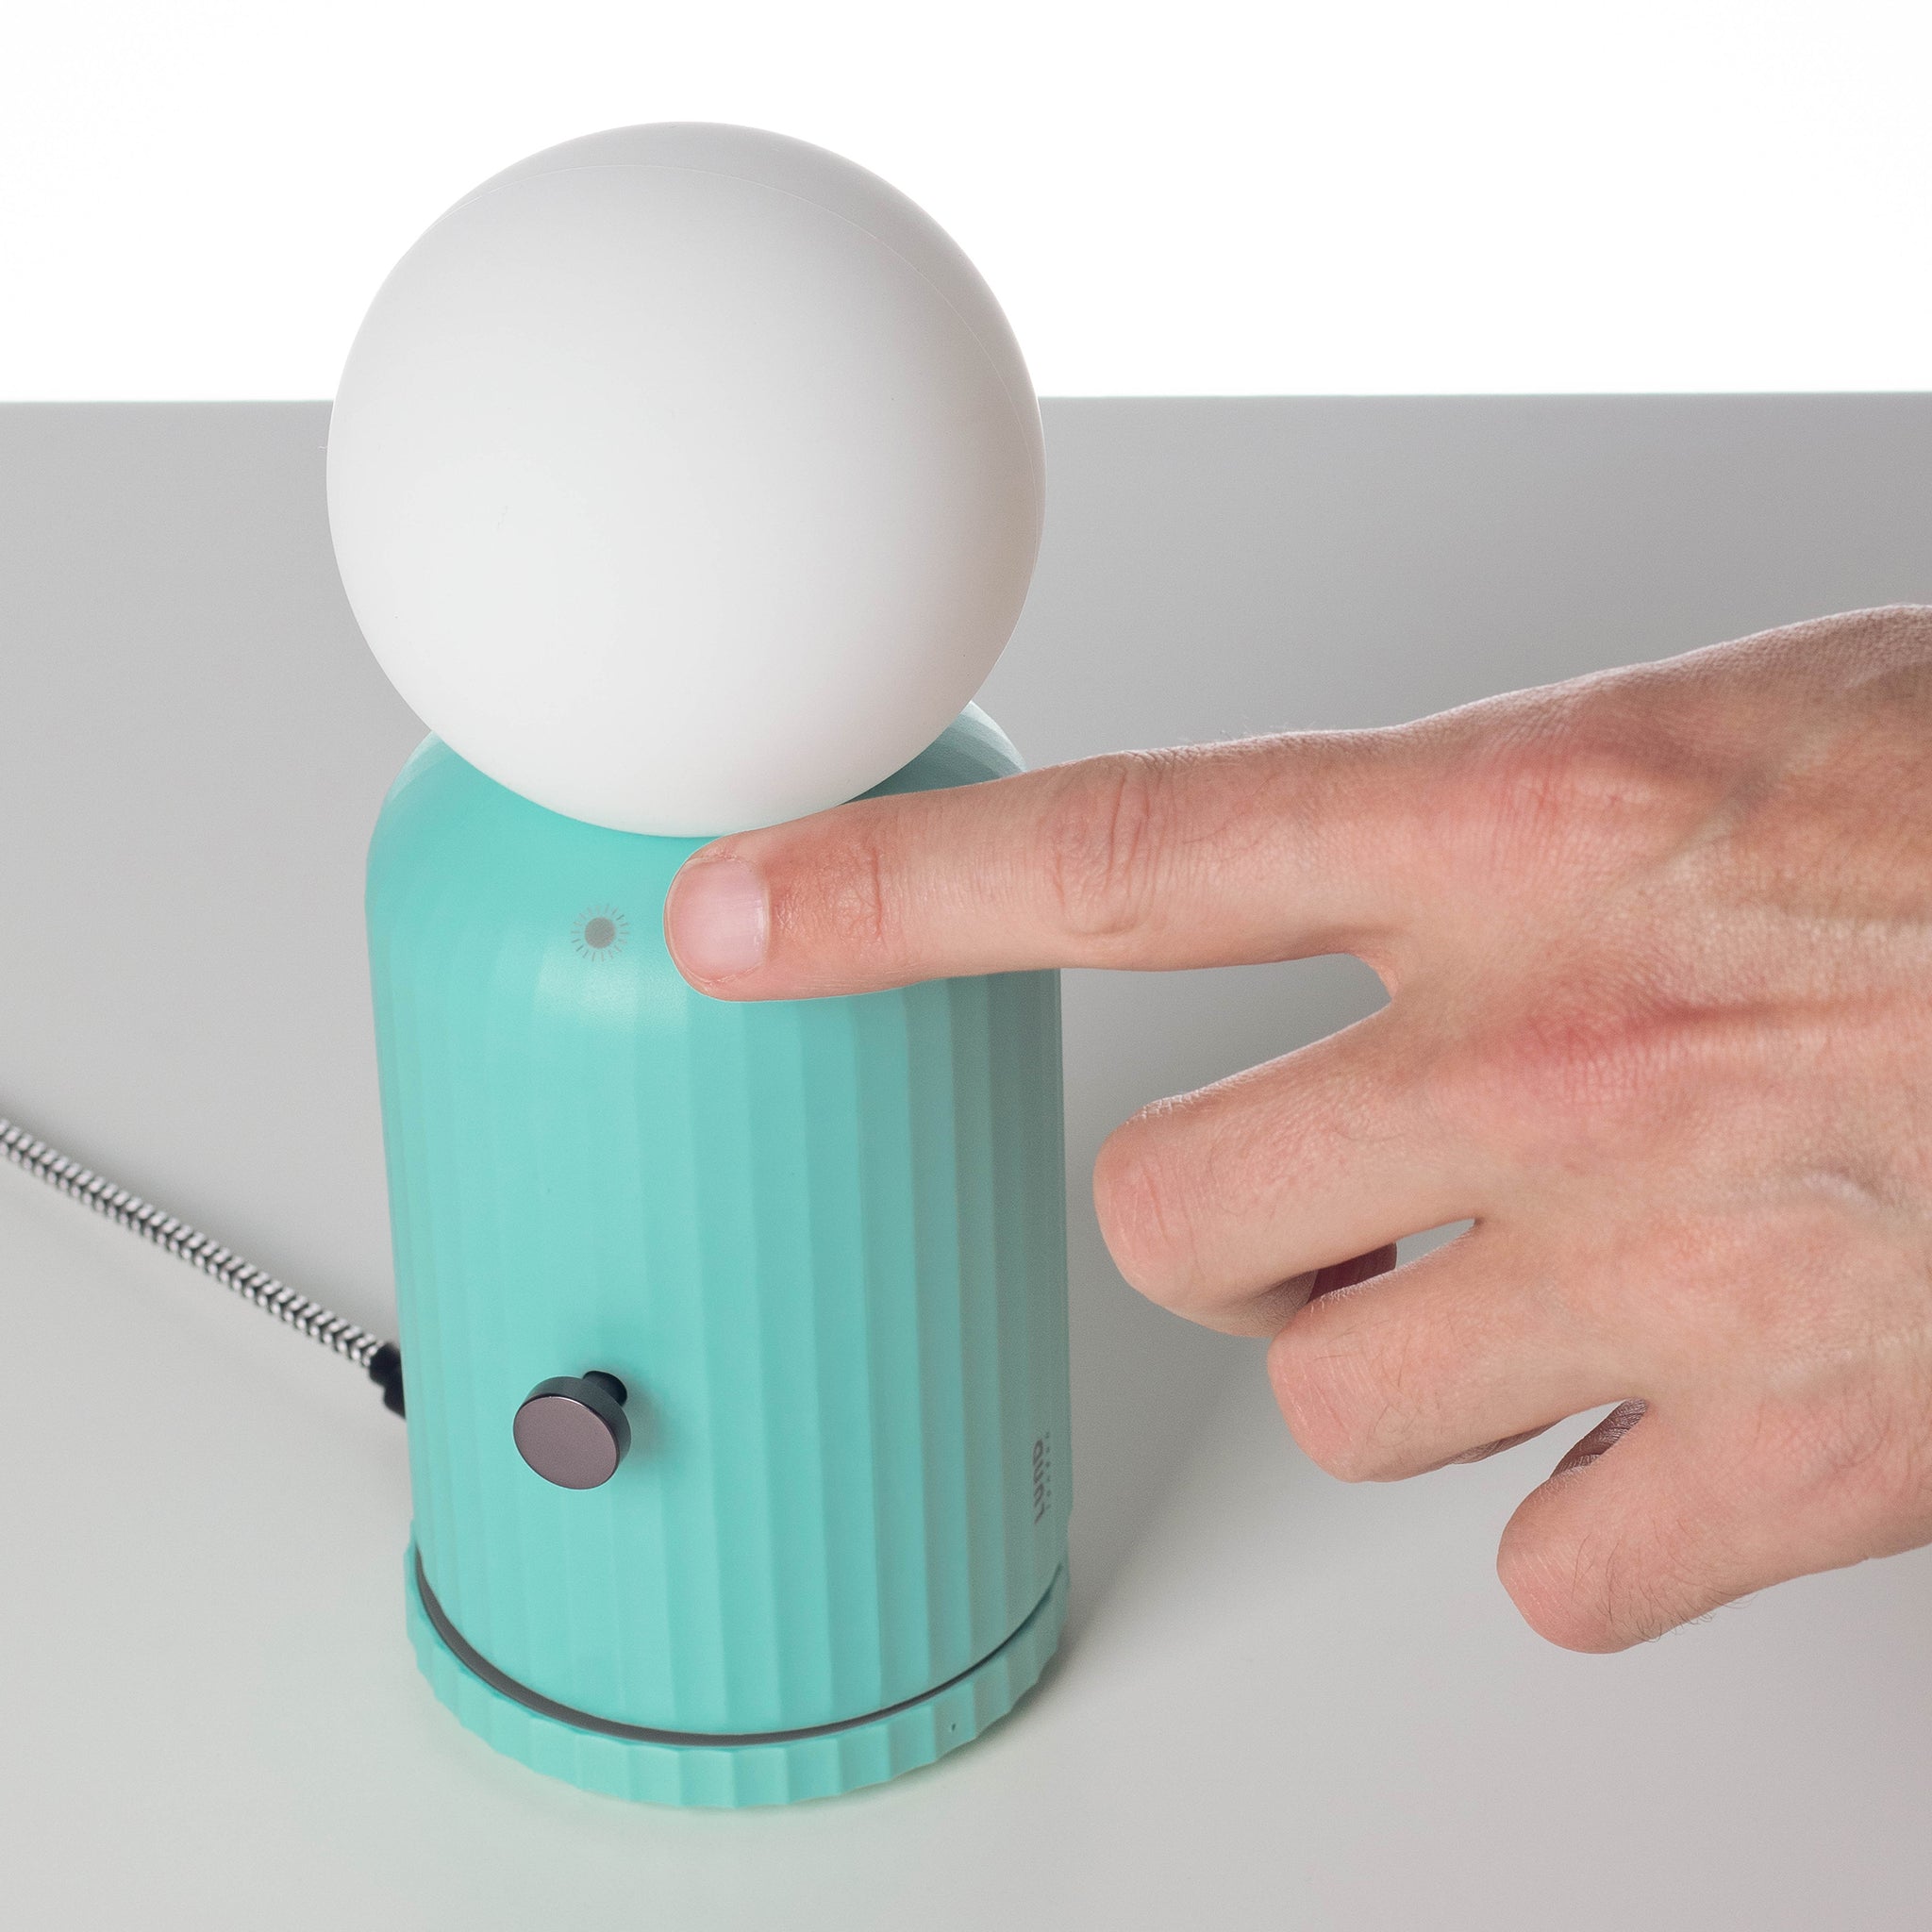 Skittle Oplaadbare Lamp Mint│Lund London│Draadloos│foto met vinger op touchknop